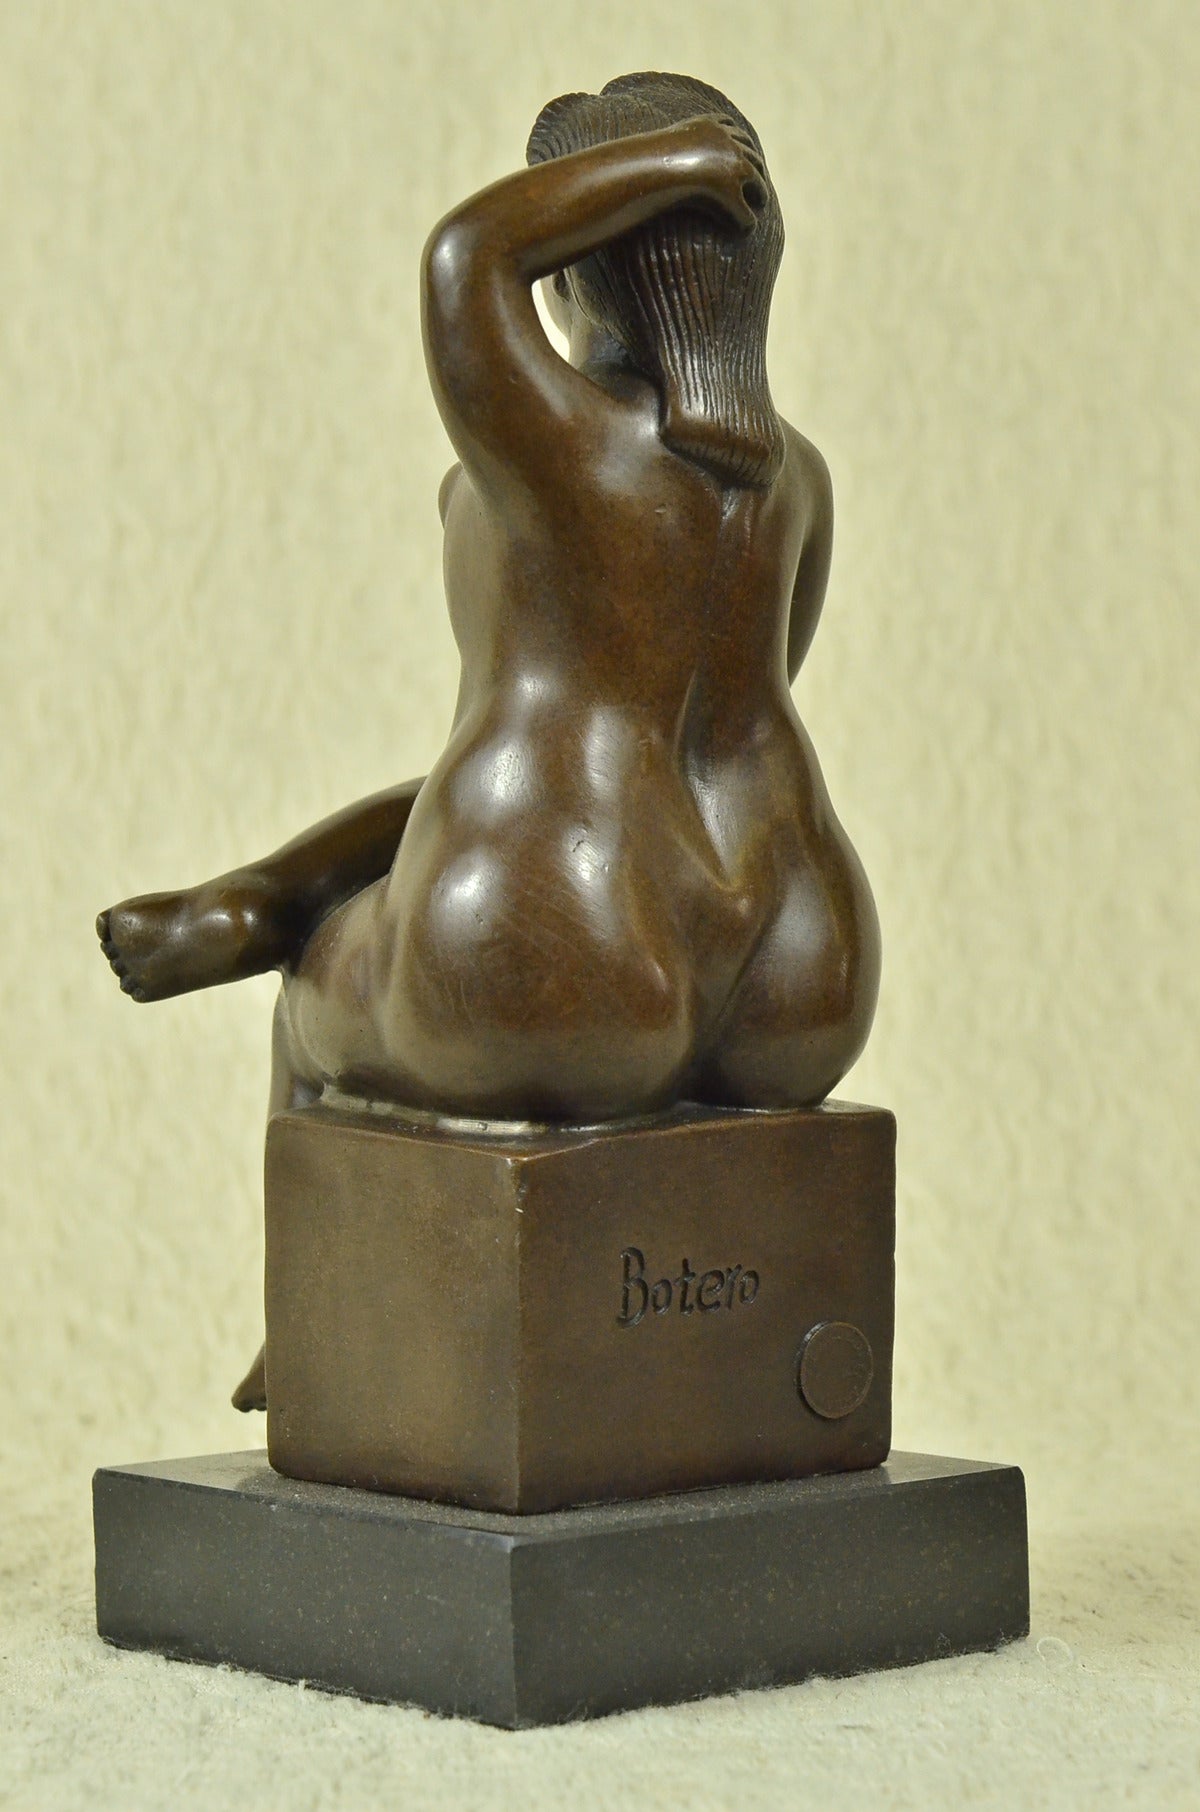 Handcrafted bronze sculpture SALE Bull Rides Woman Plump Botero Fernando